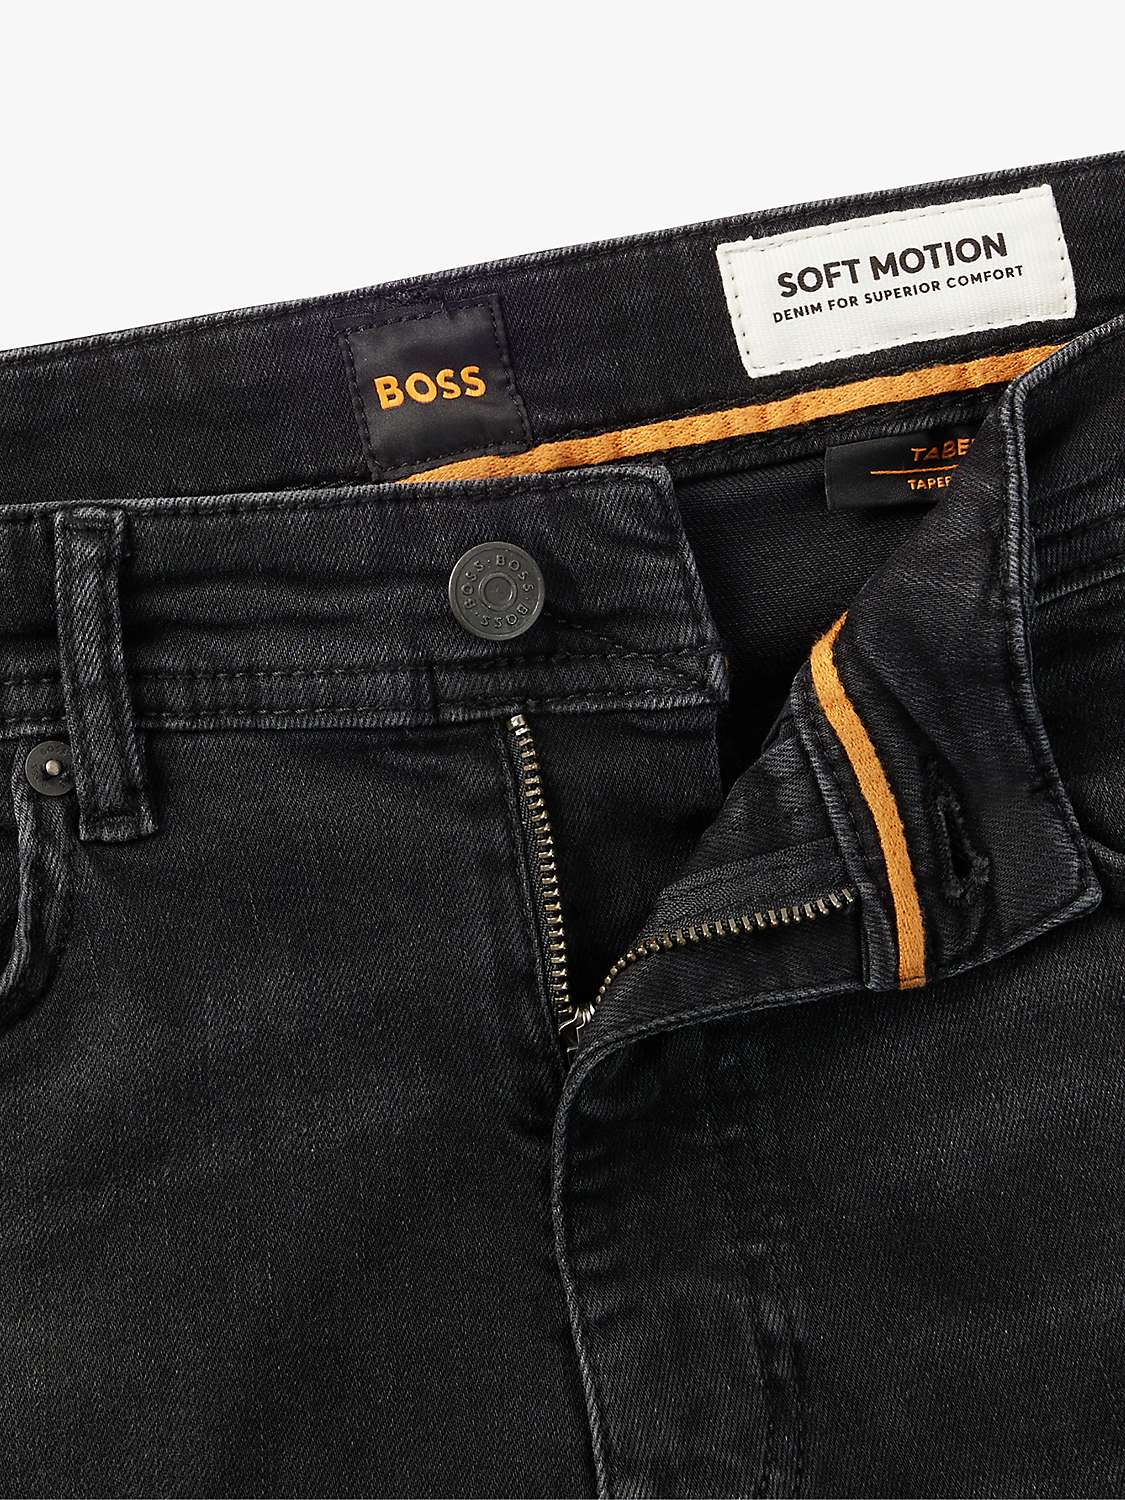 Buy BOSS Taber Zip Tapered Jeans, Dark Grey Online at johnlewis.com